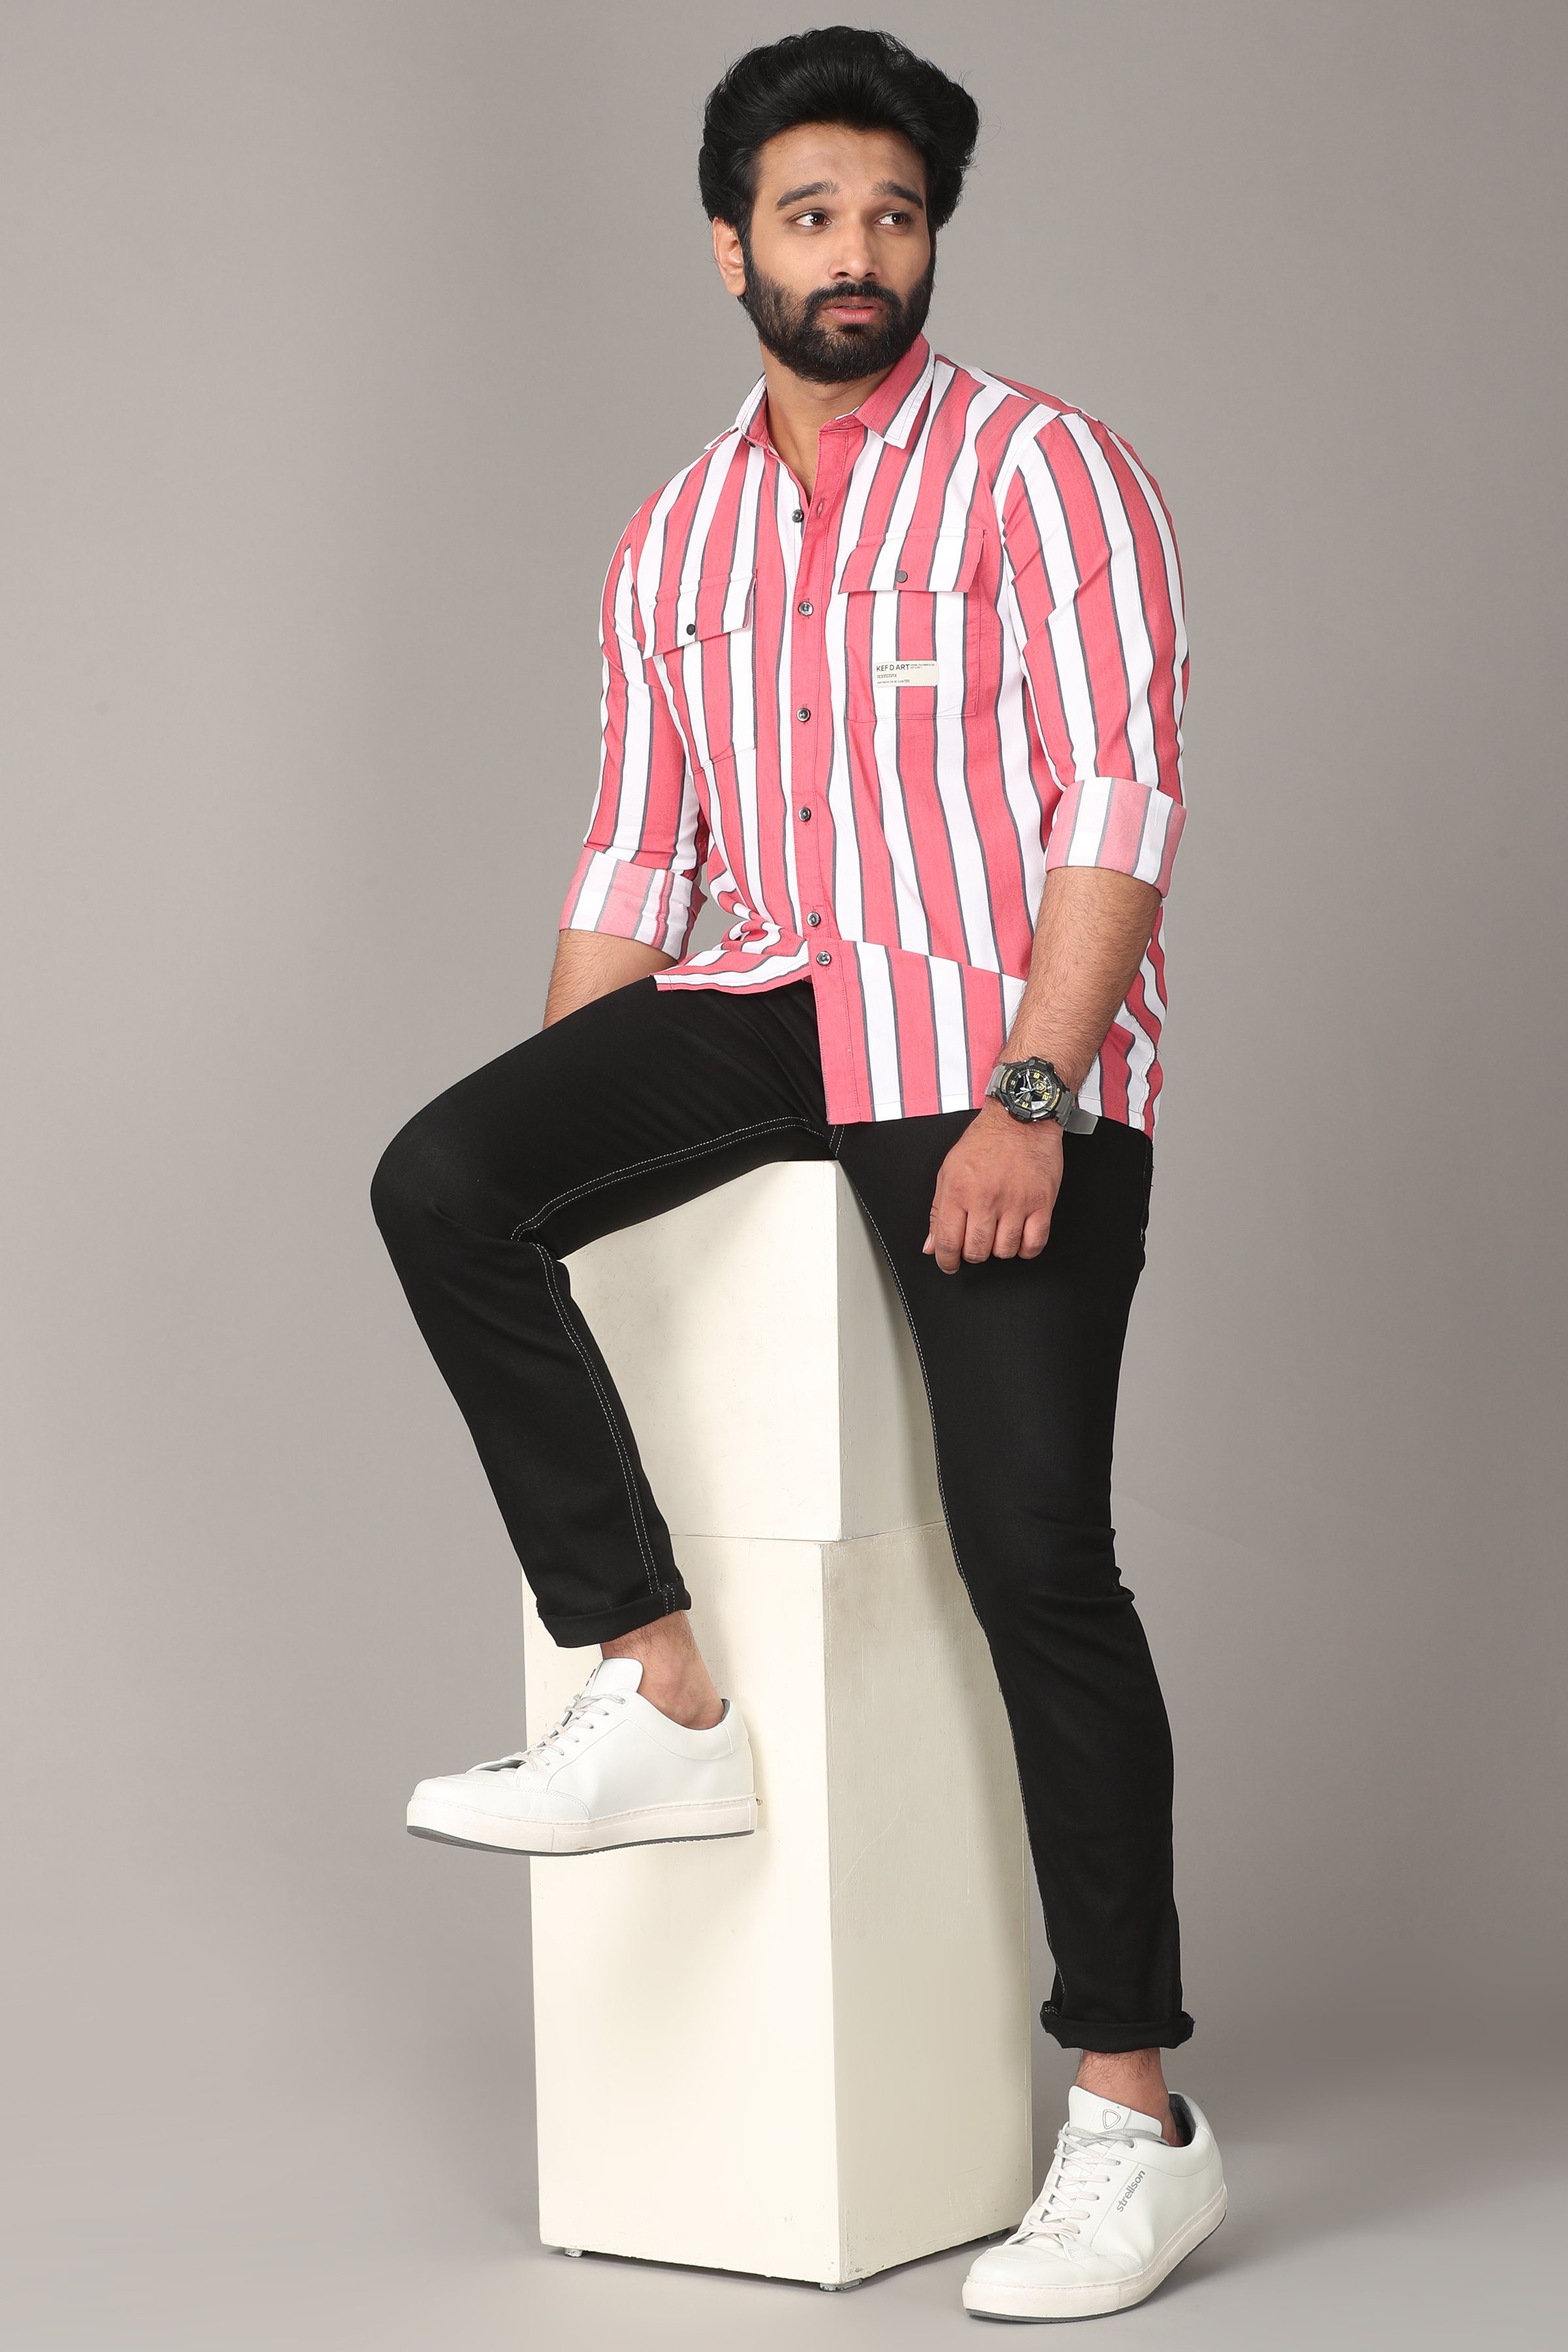 Rose Dual White Striped Full Sleeve Shirt Shirts KEF 